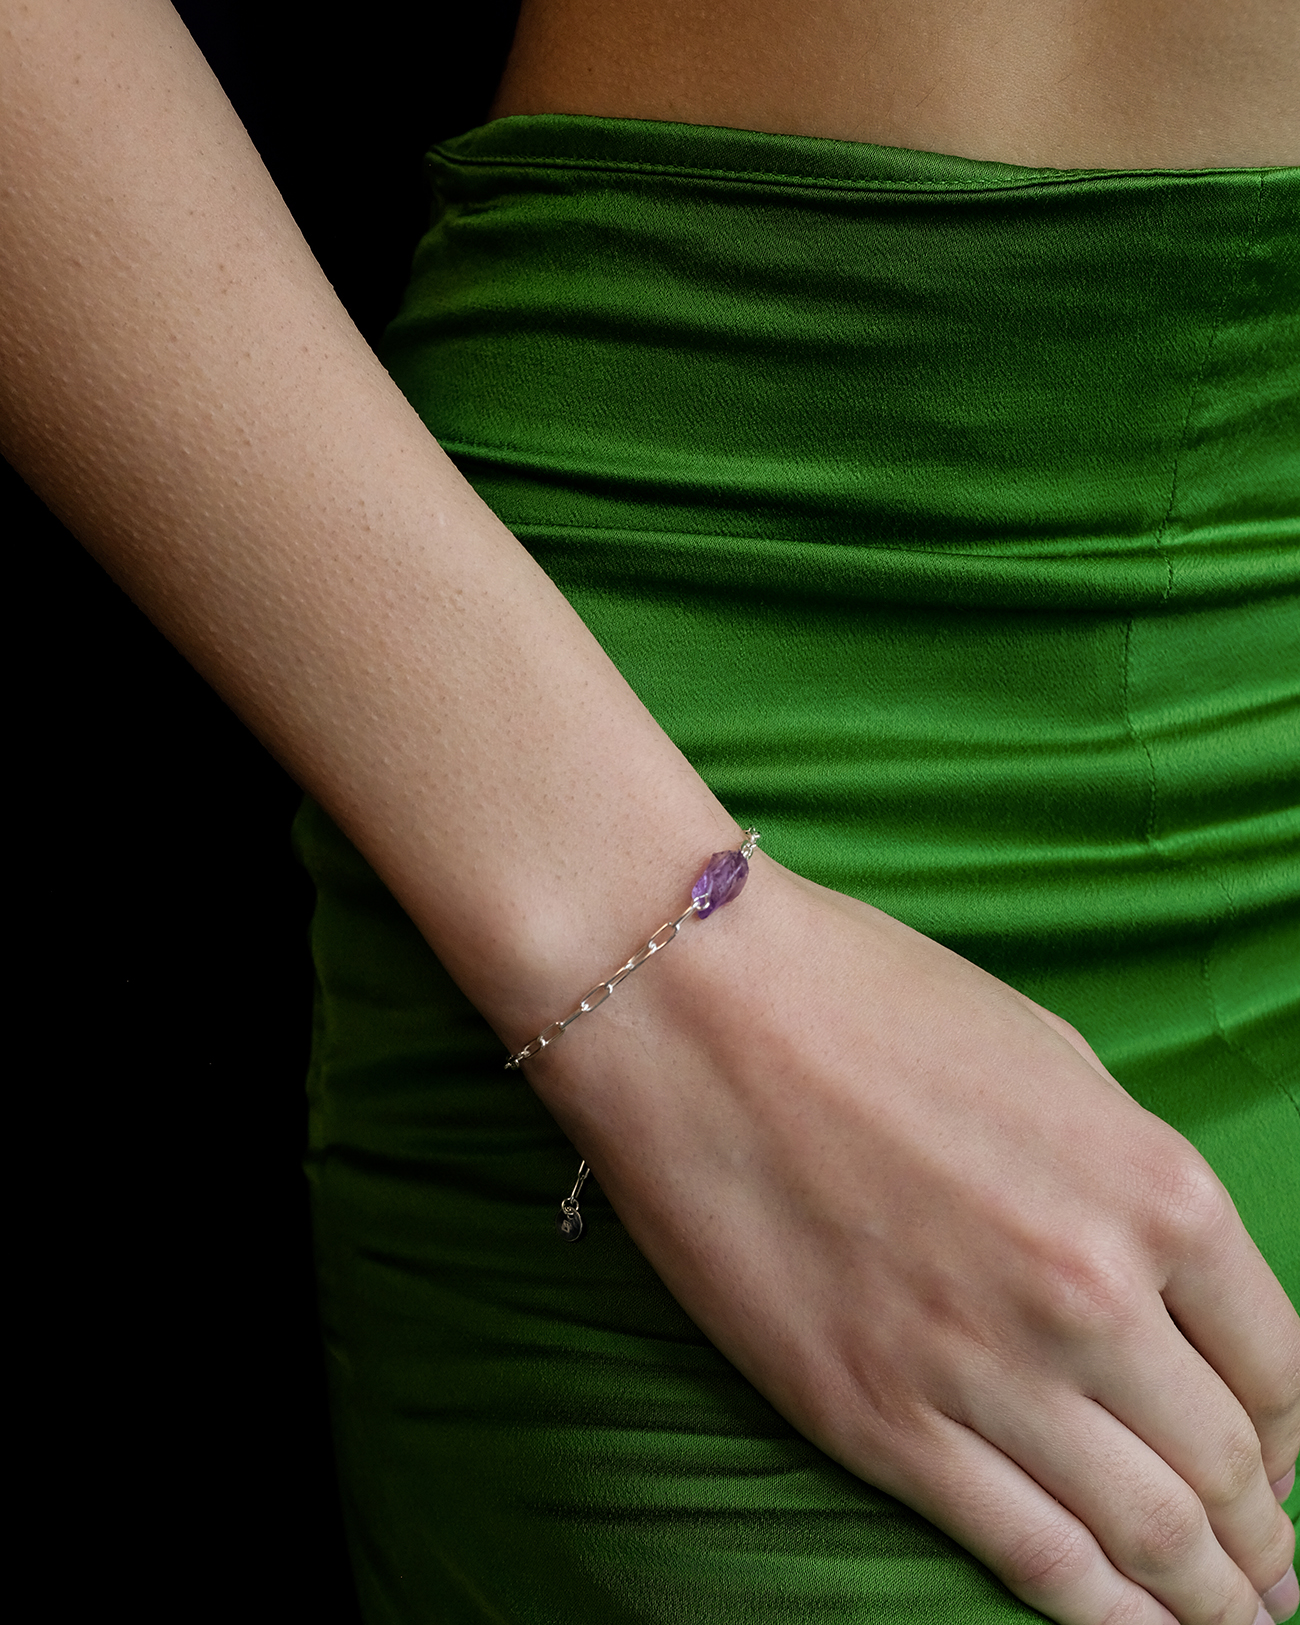 Metaformi-jewelry-uncut-gems-silver-bracelet-4